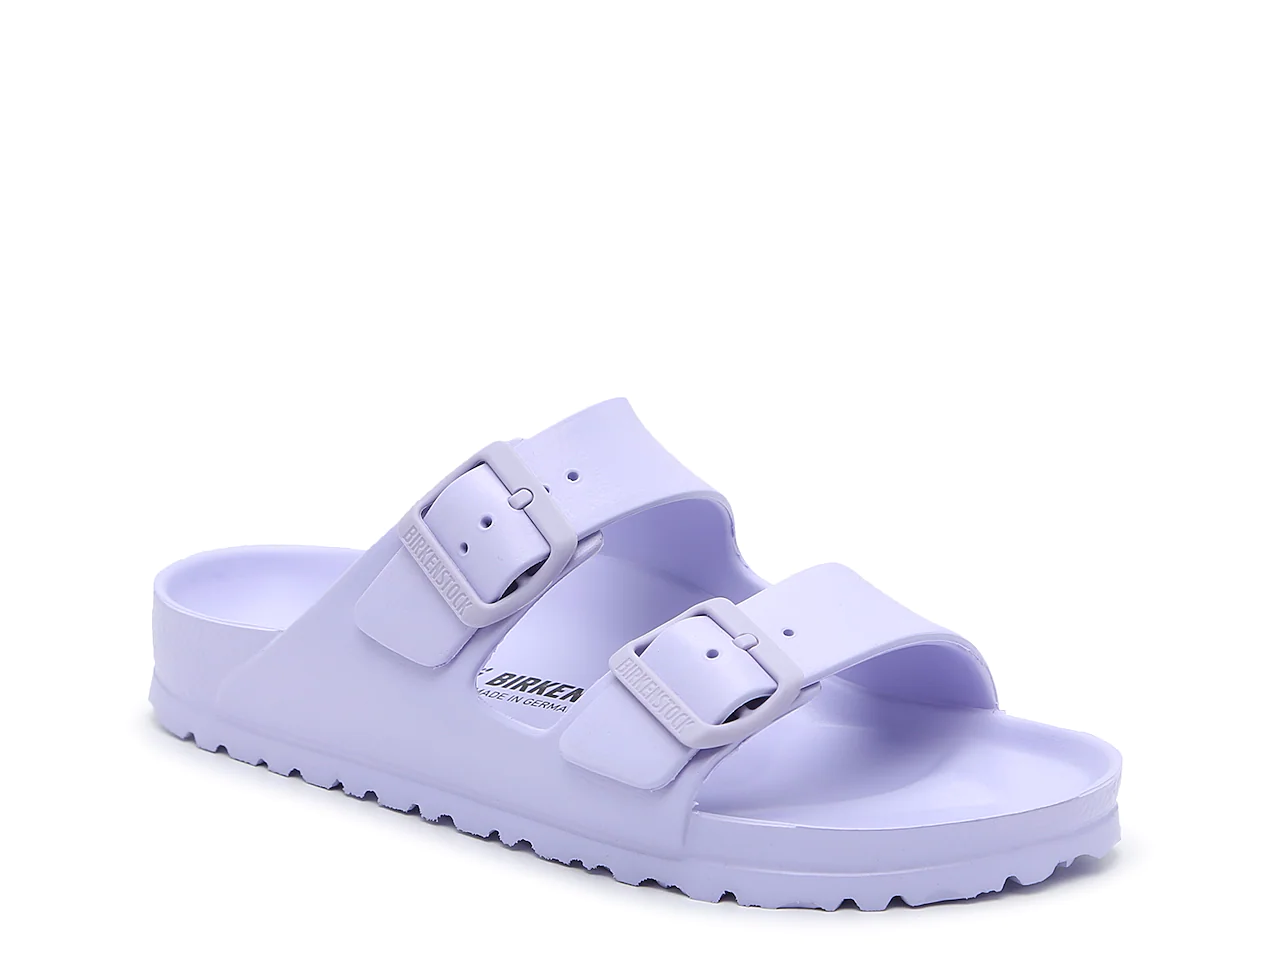 A lavender sandal